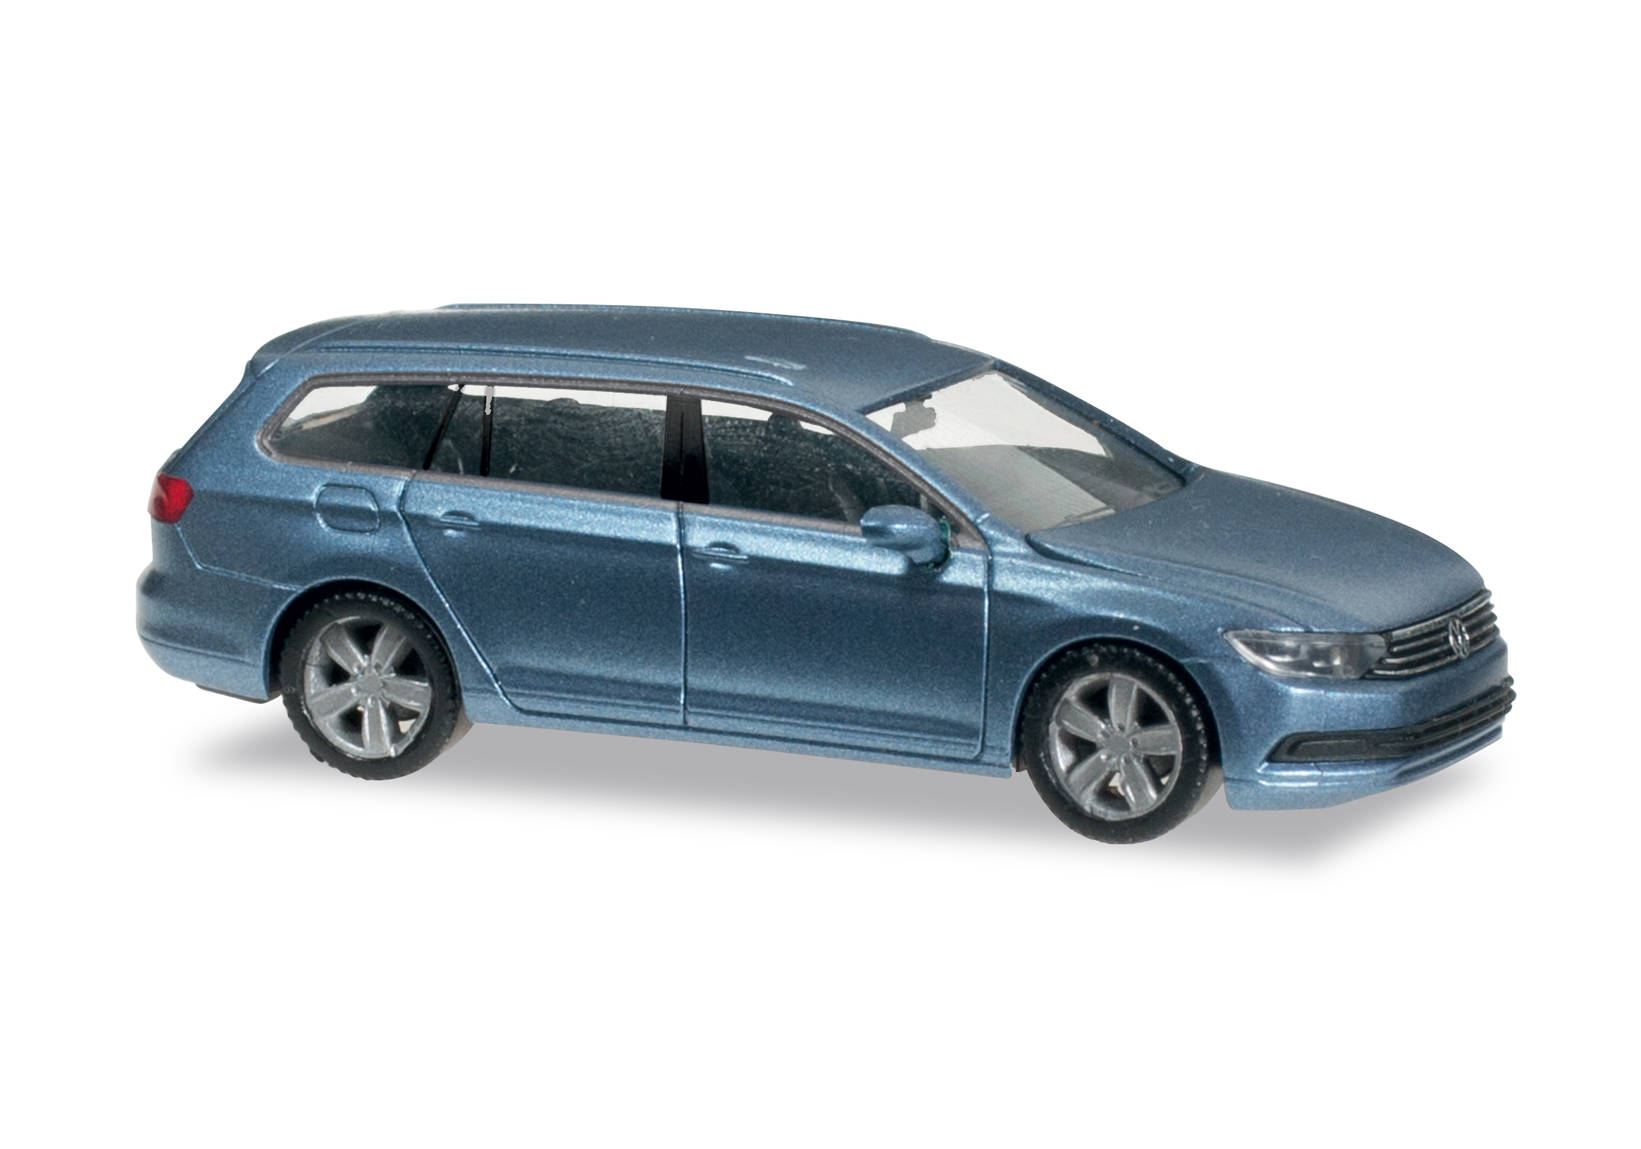 VW Passat Variant, harvard blue metallic